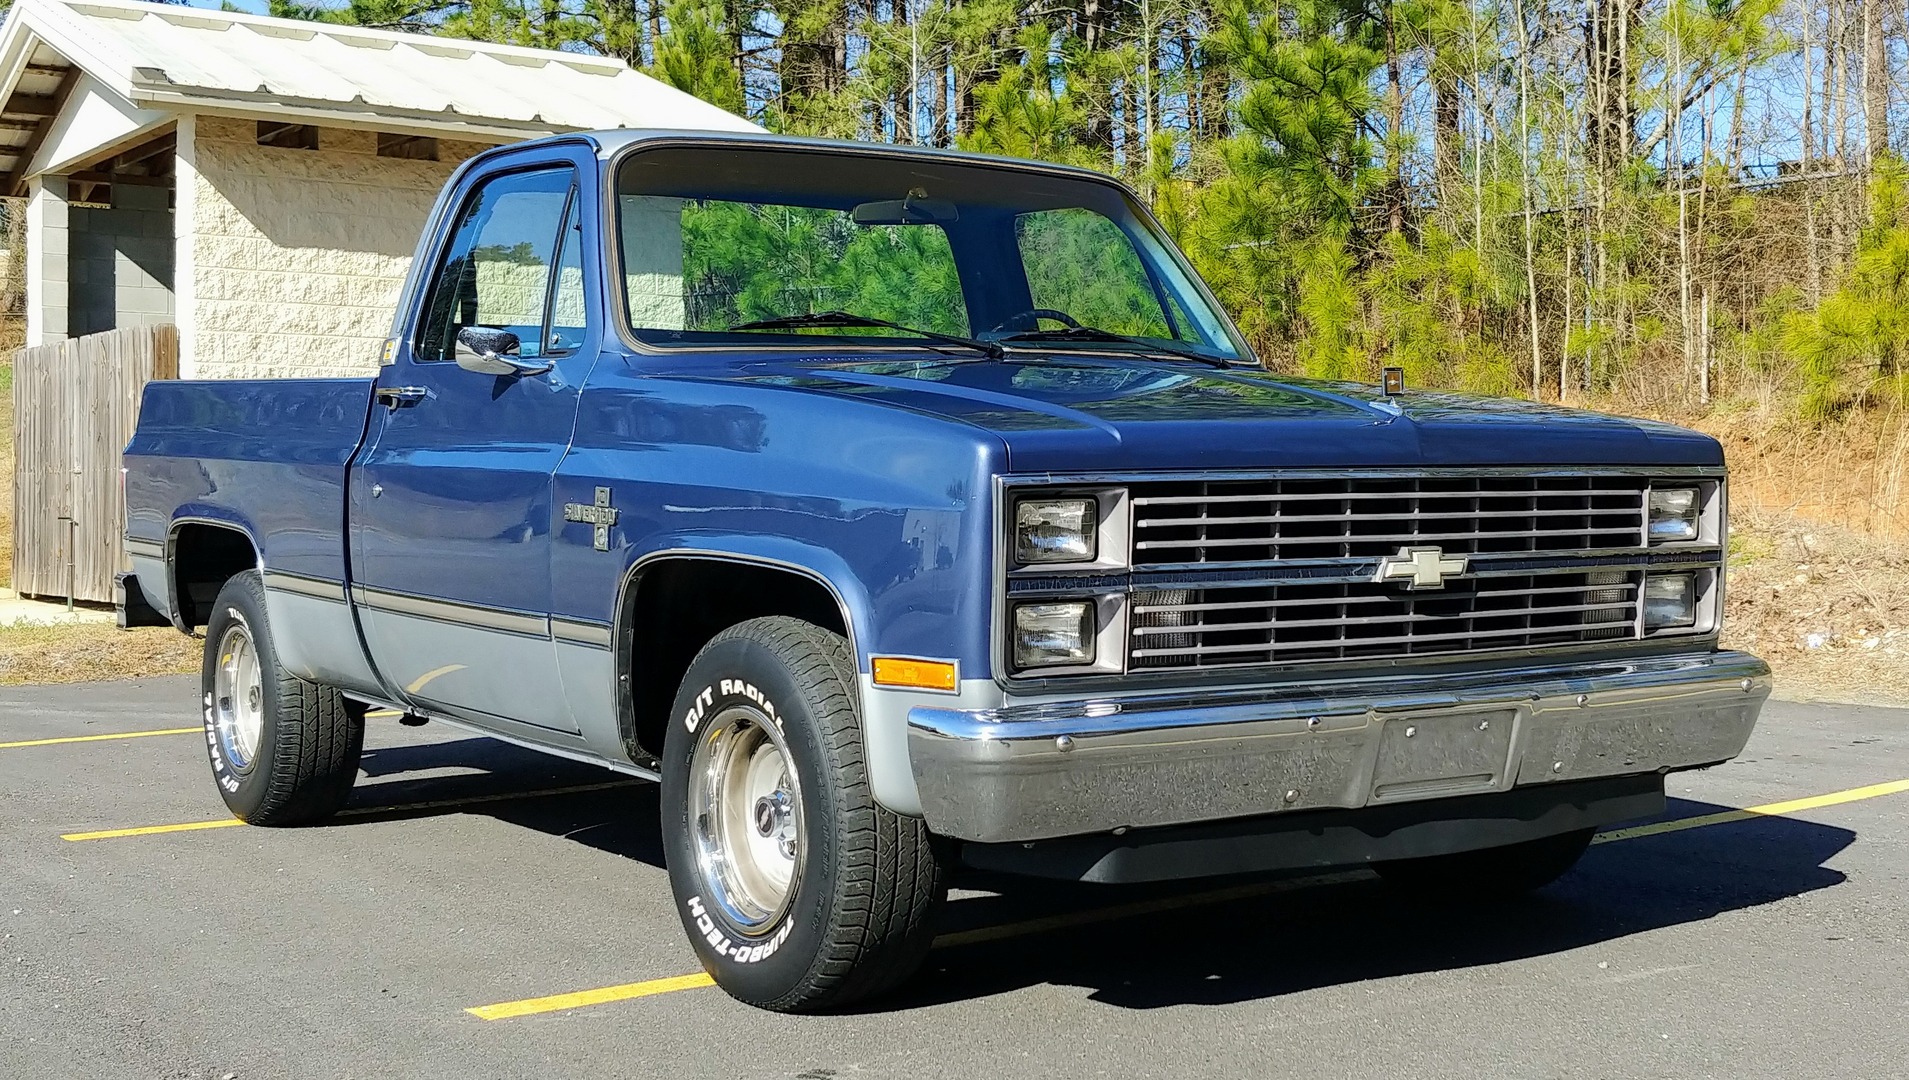 1984 Chevrolet C10 Square Body Truck Stock 458484cvo For Sale Near